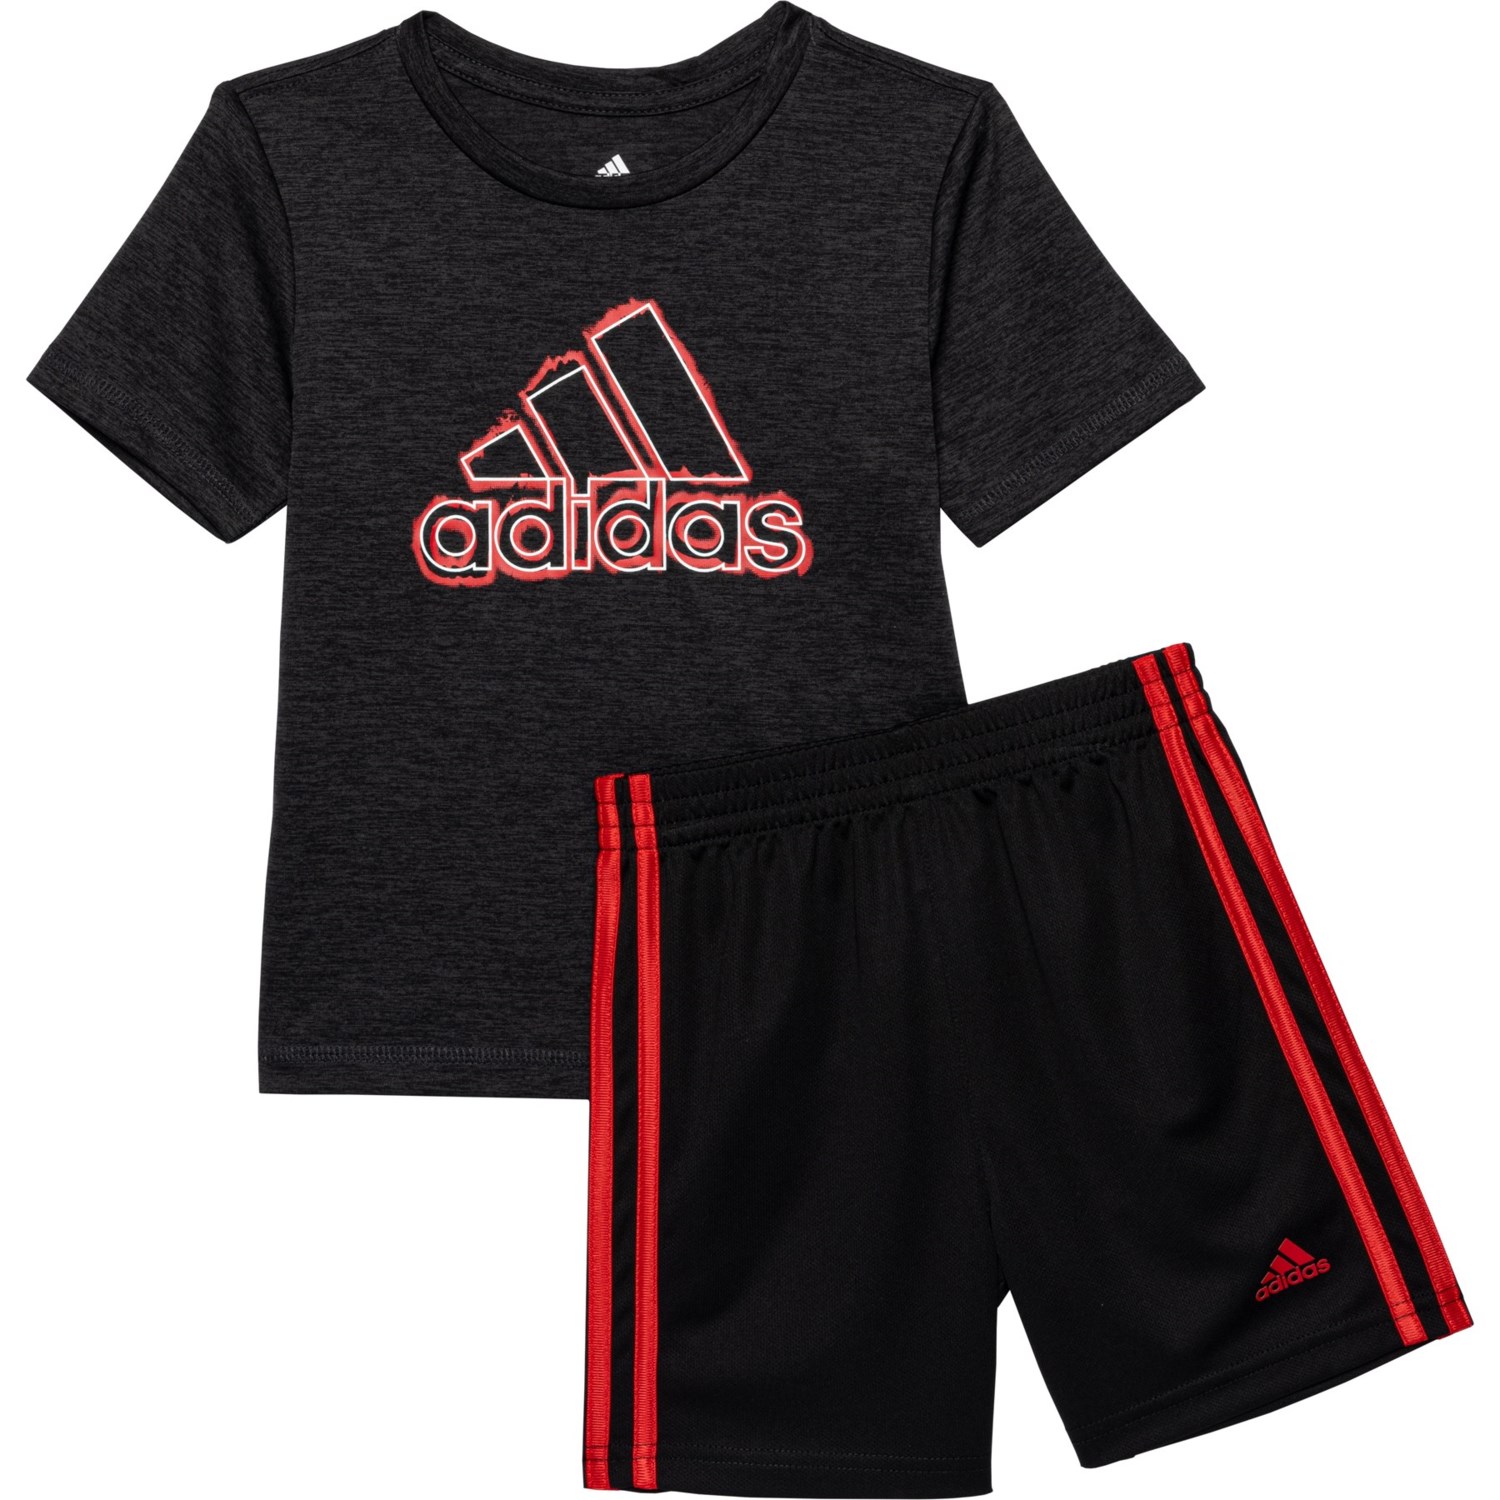 () AfB_X gh[ {[CY OtBbN T-Vc Ah V[c Zbg - V[g X[u adidas Toddler Boys Graphic T-Shirt and Shorts Set - Short Sleeve Black